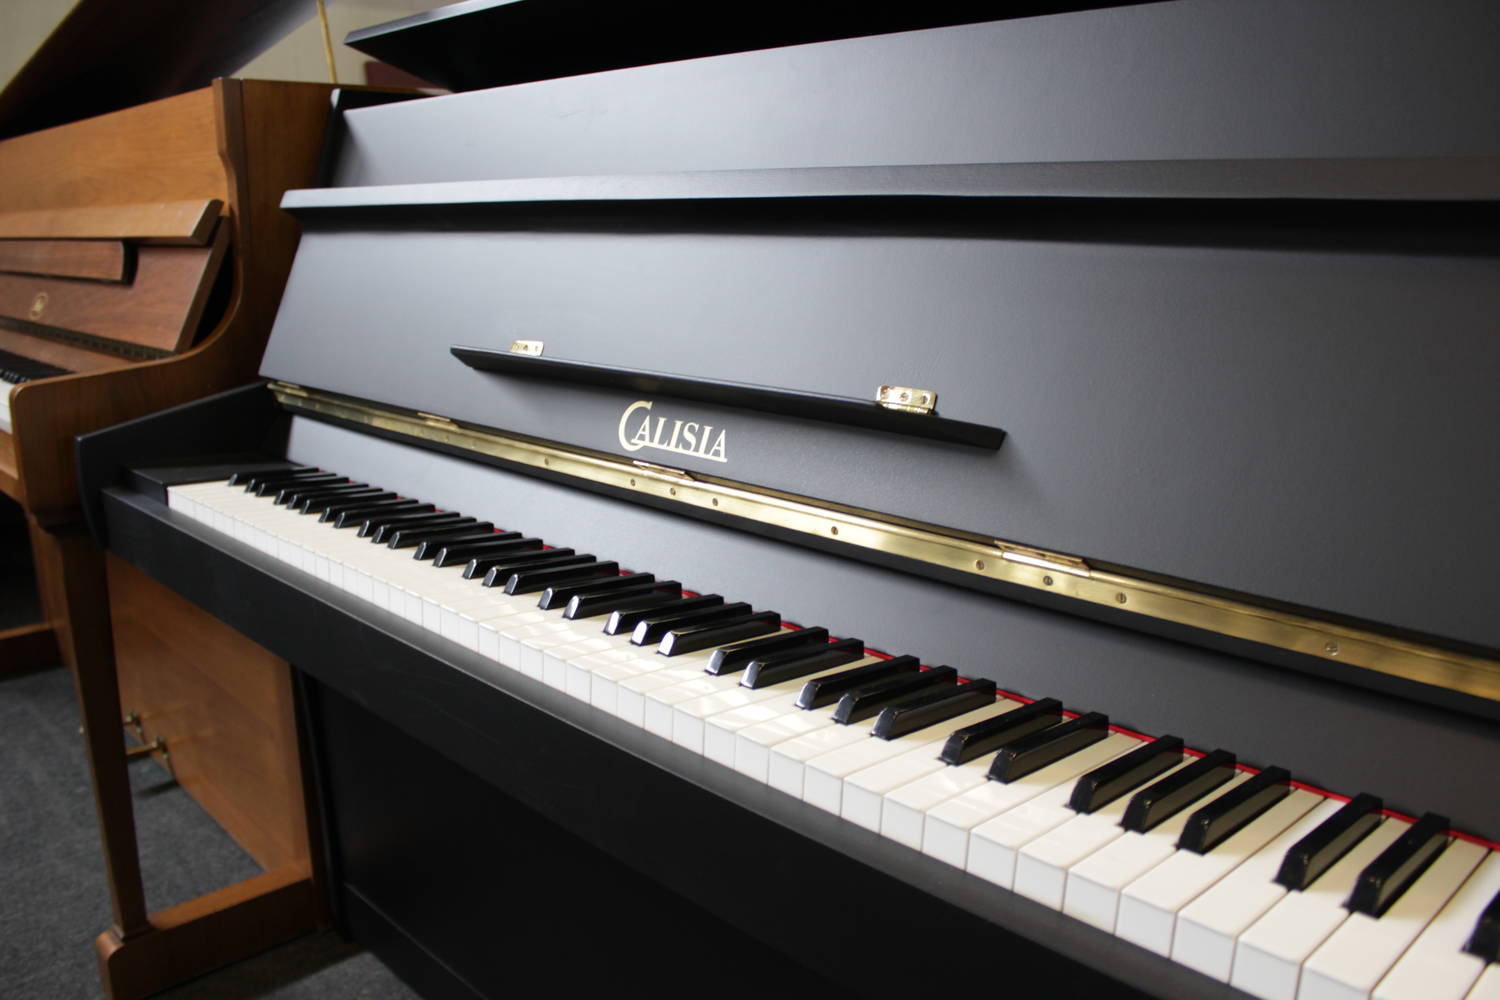 Calisia, Mod. 108 Klavier